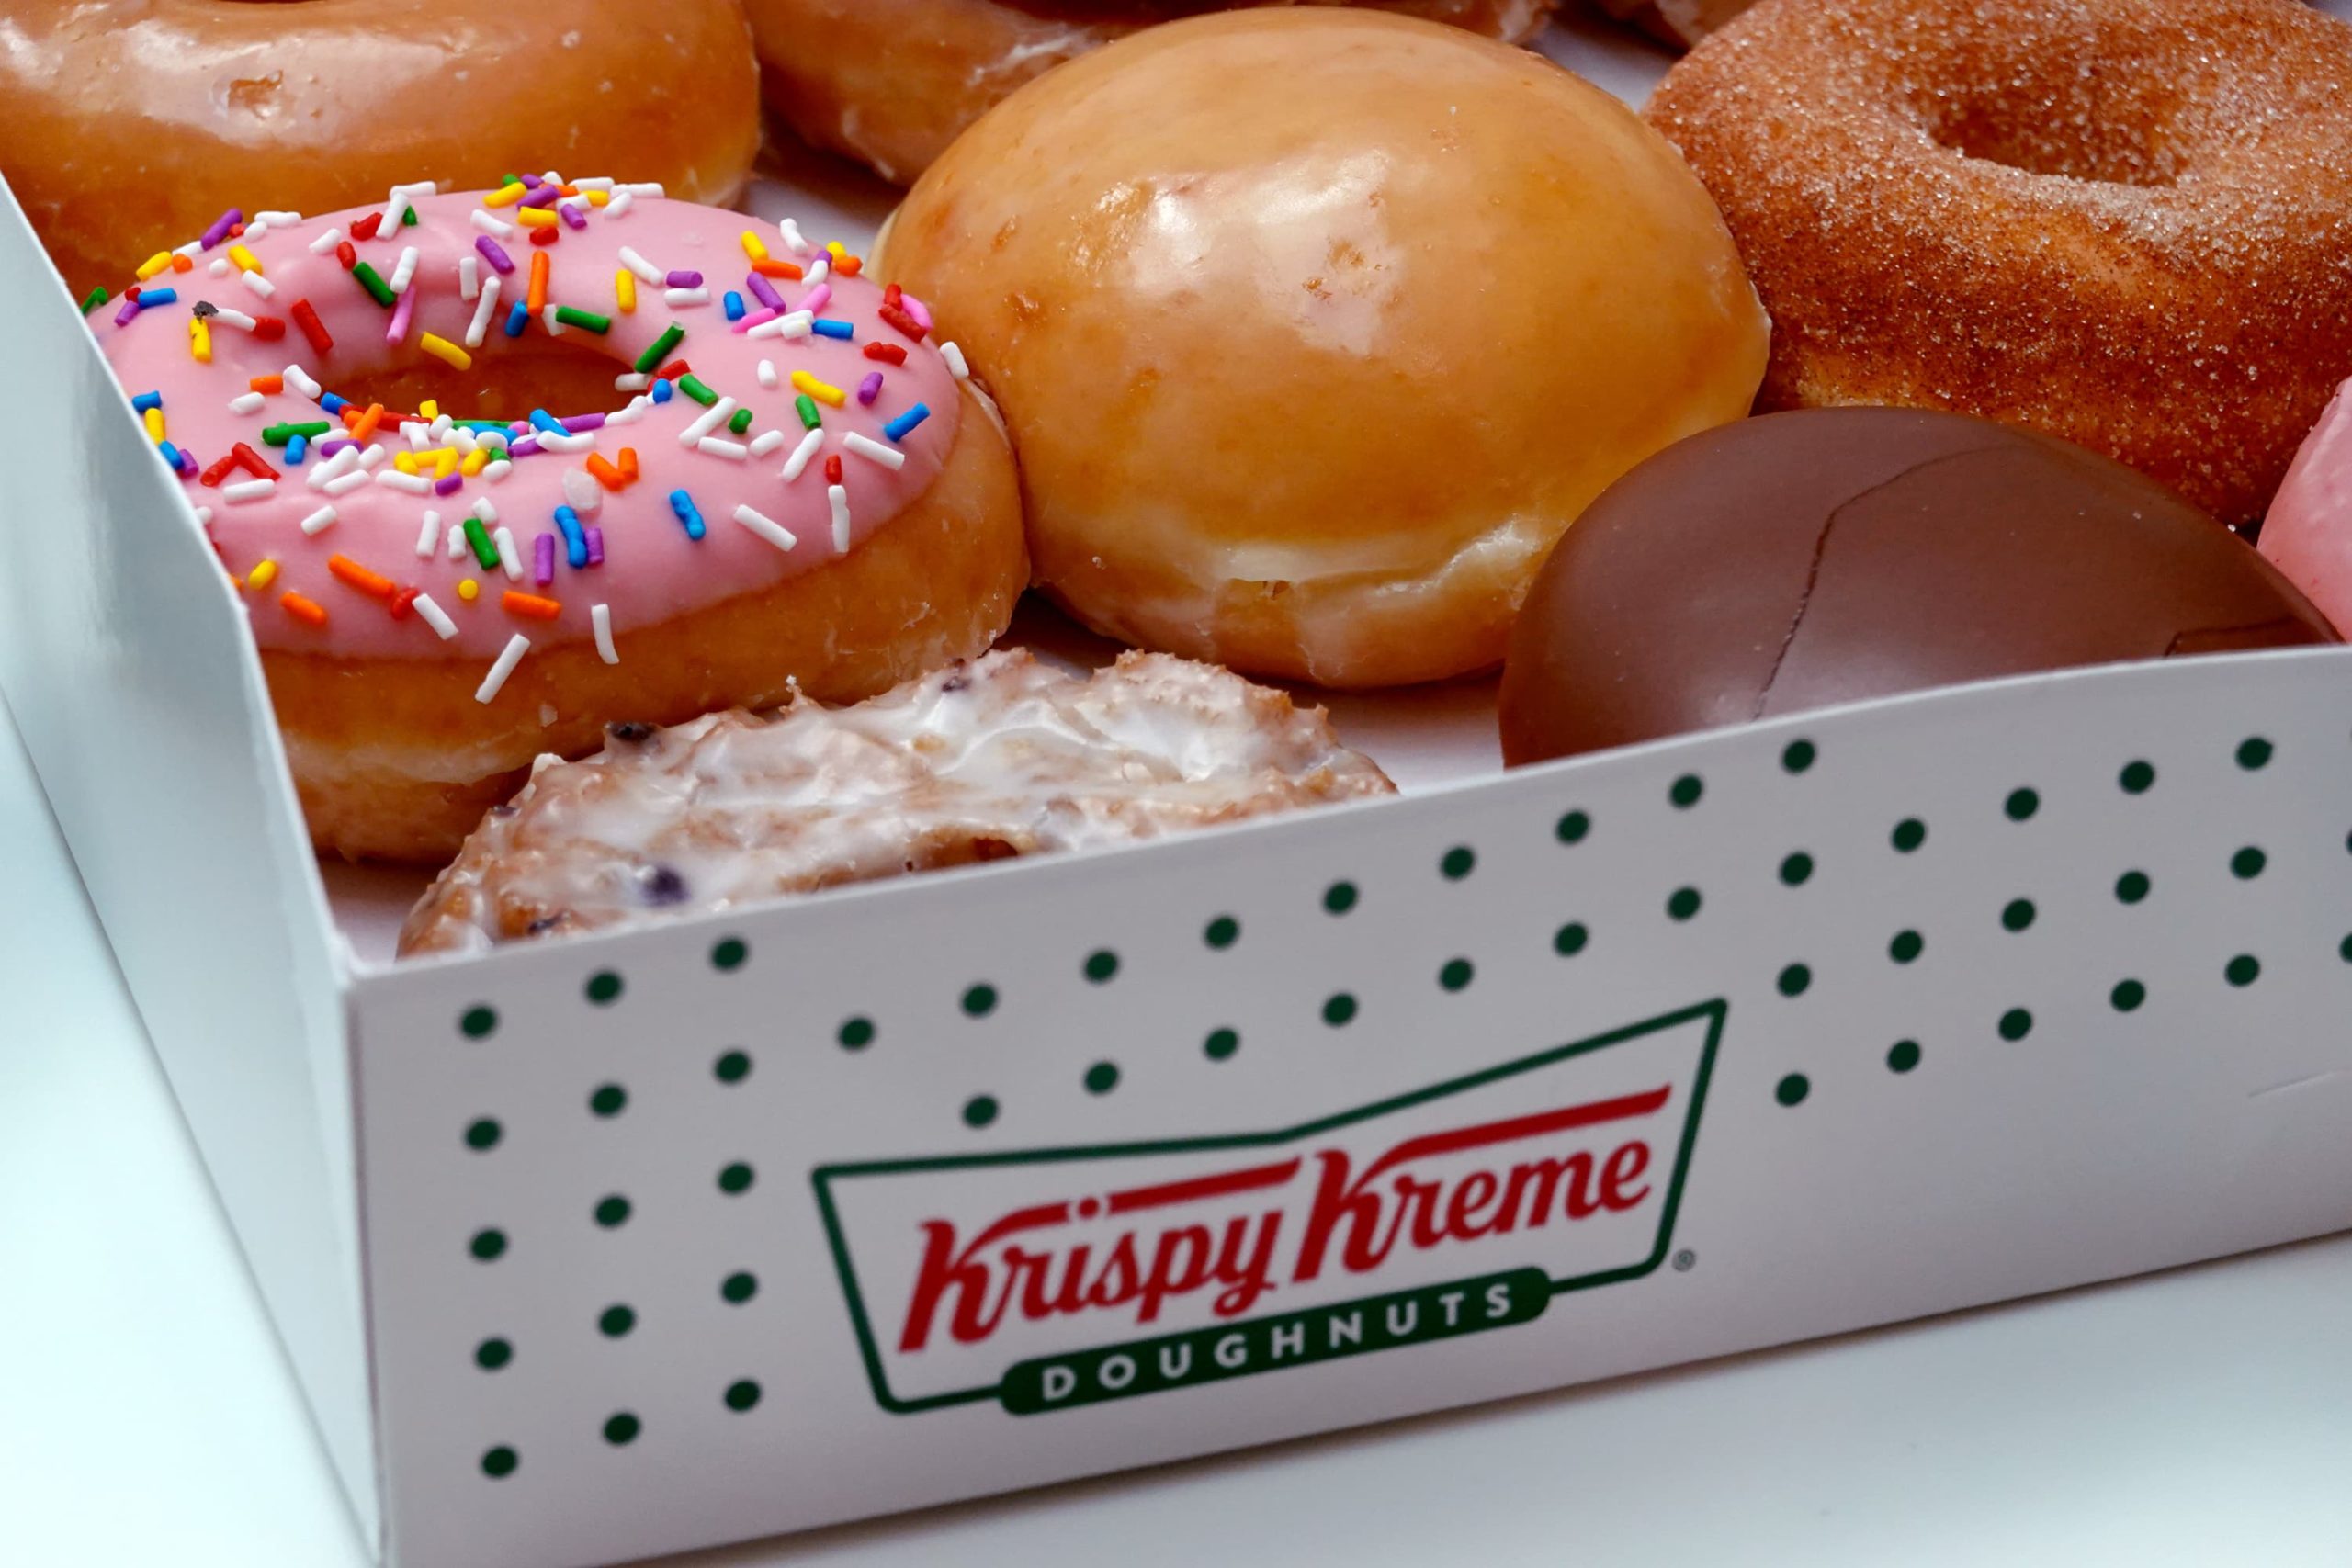 Krispy Kreme reports first quarterly profit since going public